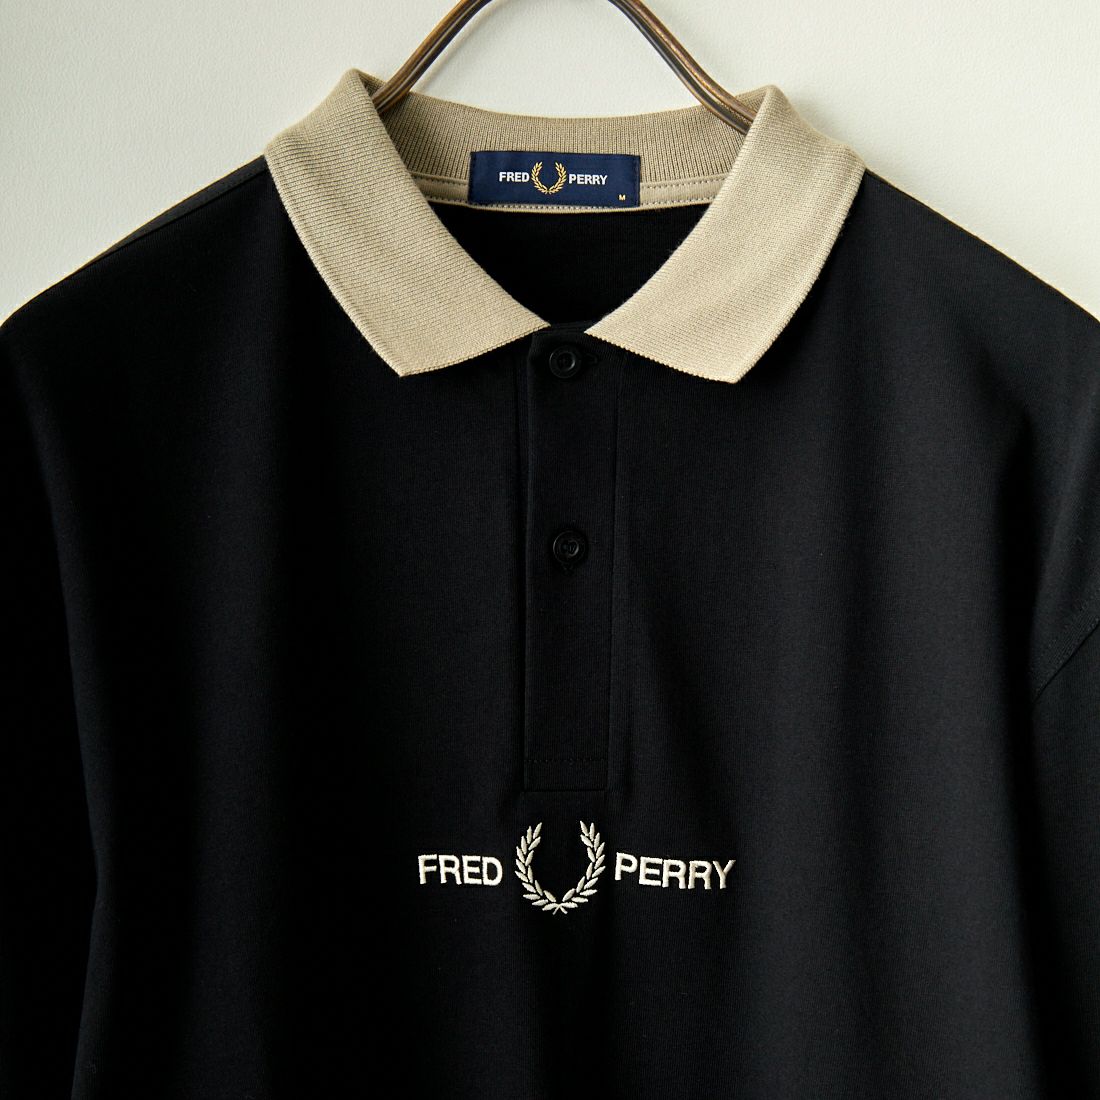 FRED PERRY [フレッドペリー] ロゴ刺繍 ロングスリーブポロシャツ [M7714] BLACK